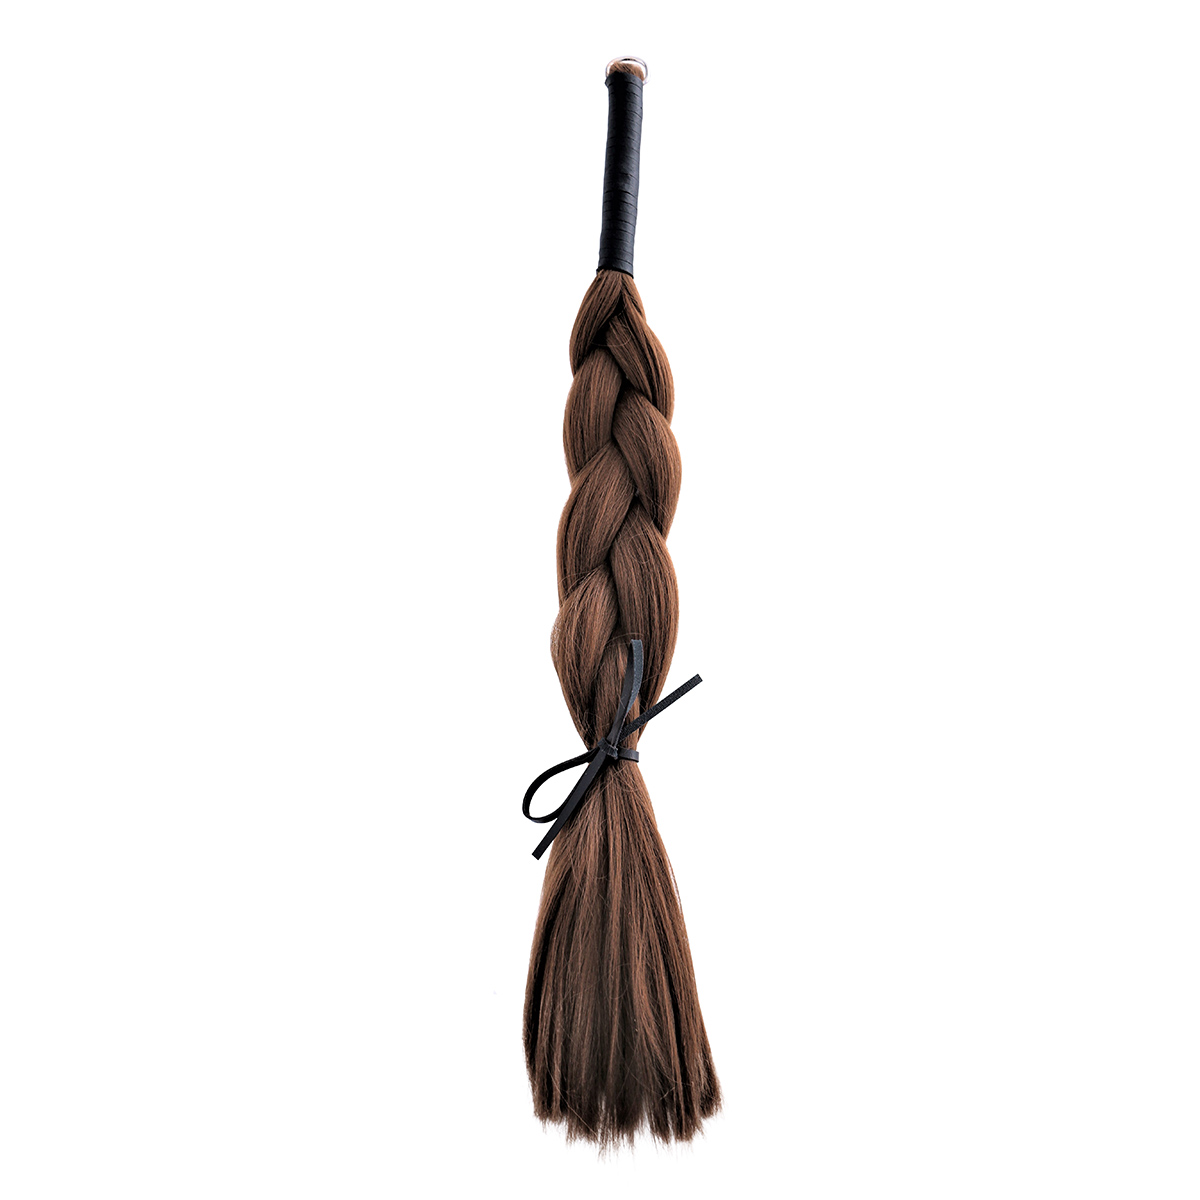 Hair-Whip-Brown-Synthetic-134-KIO-0340-3